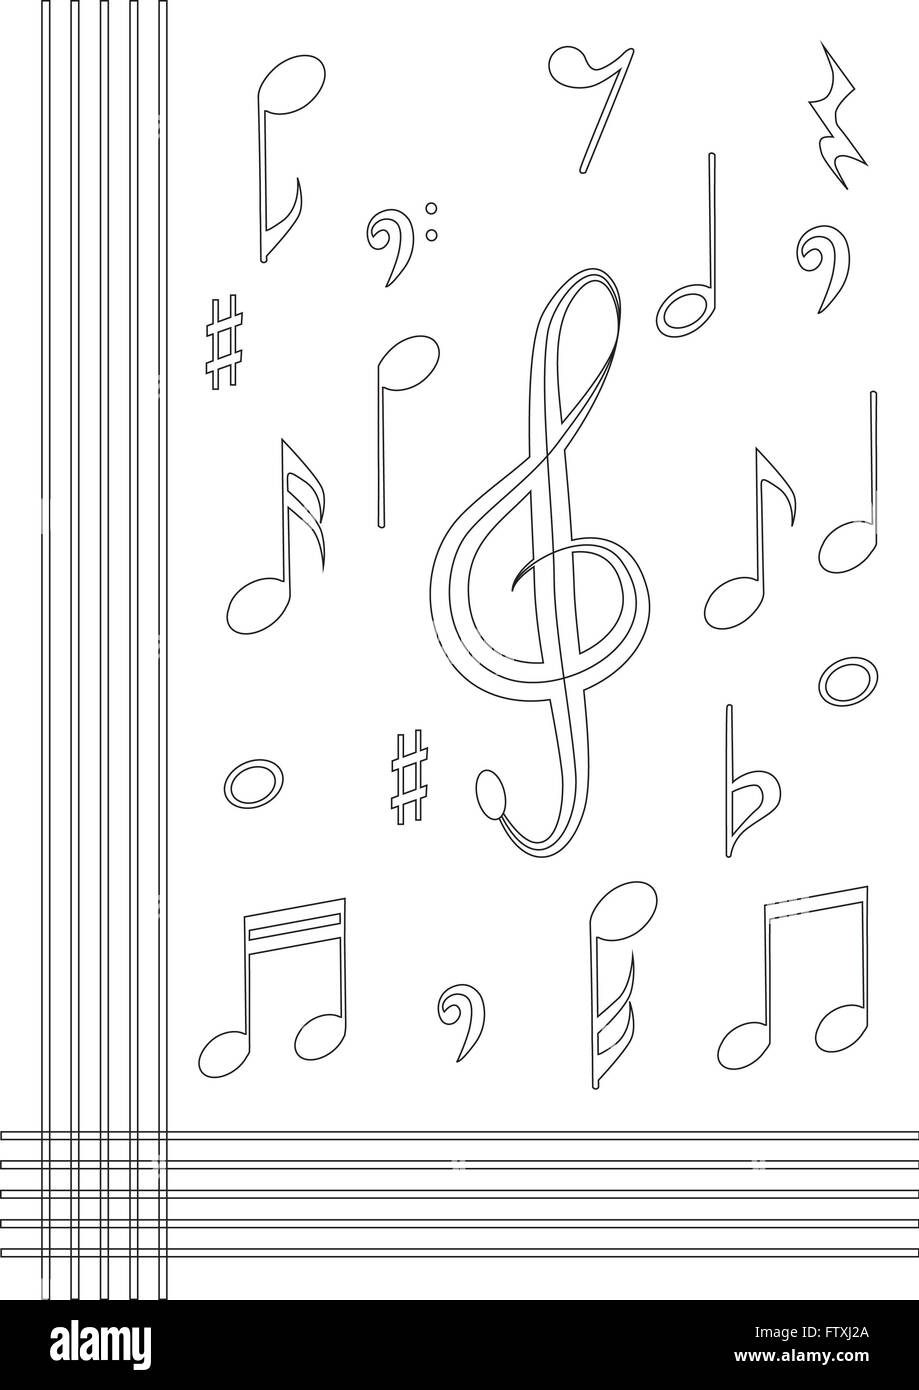 Music note symbols stock photo